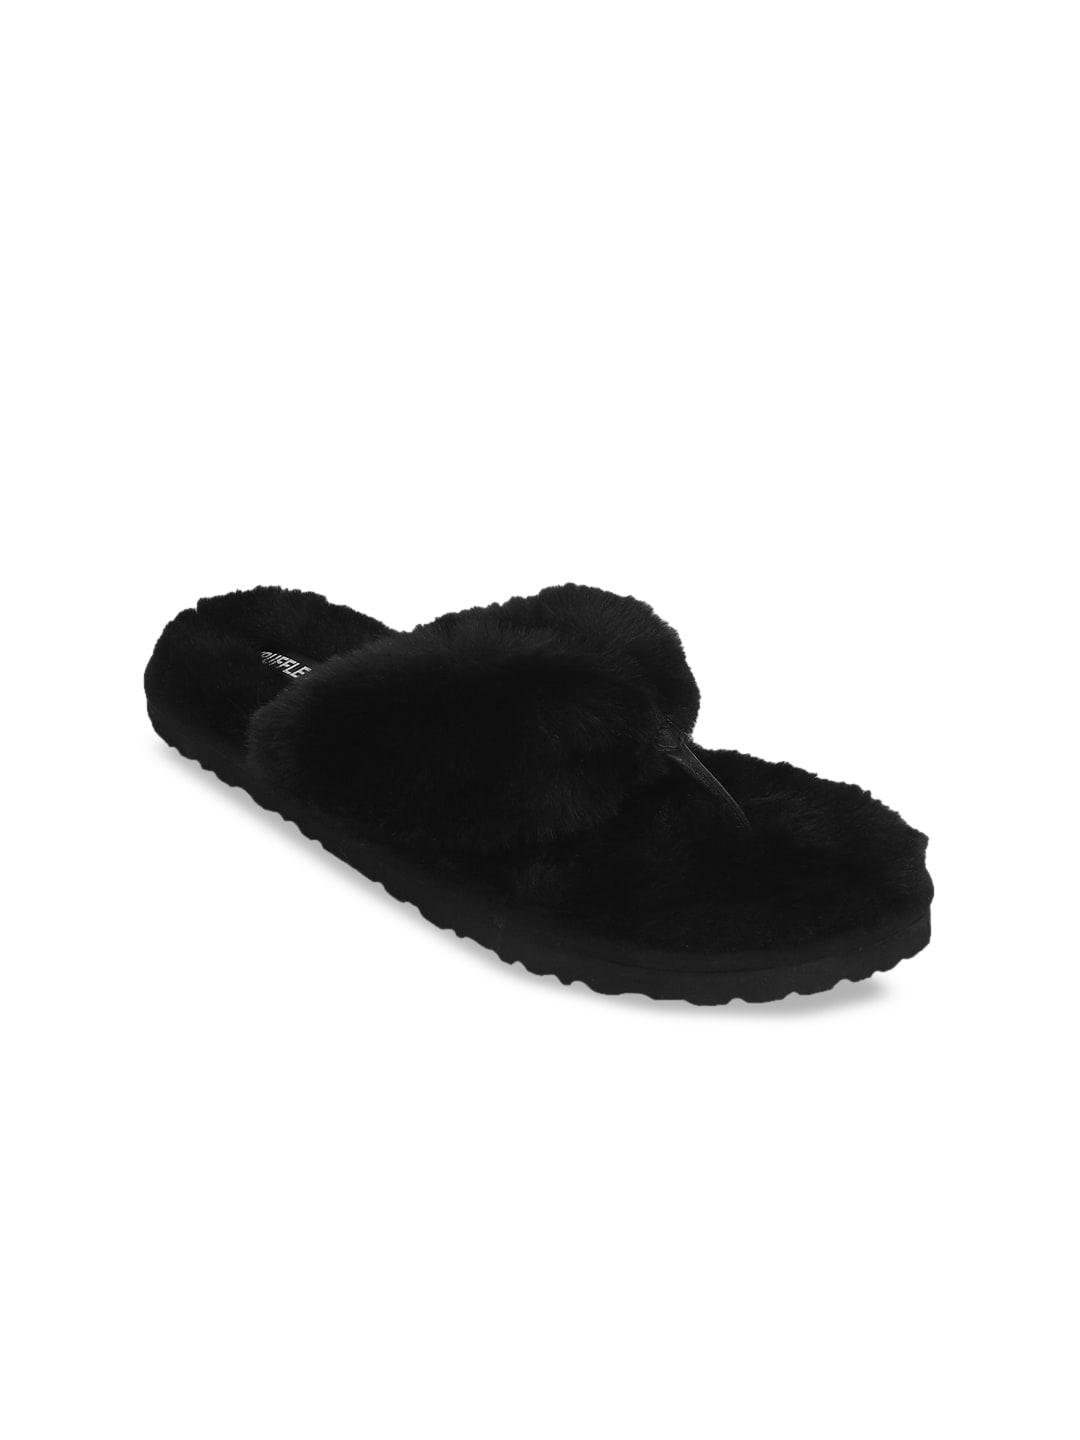 truffle collection women black solid faux fur open toe flats